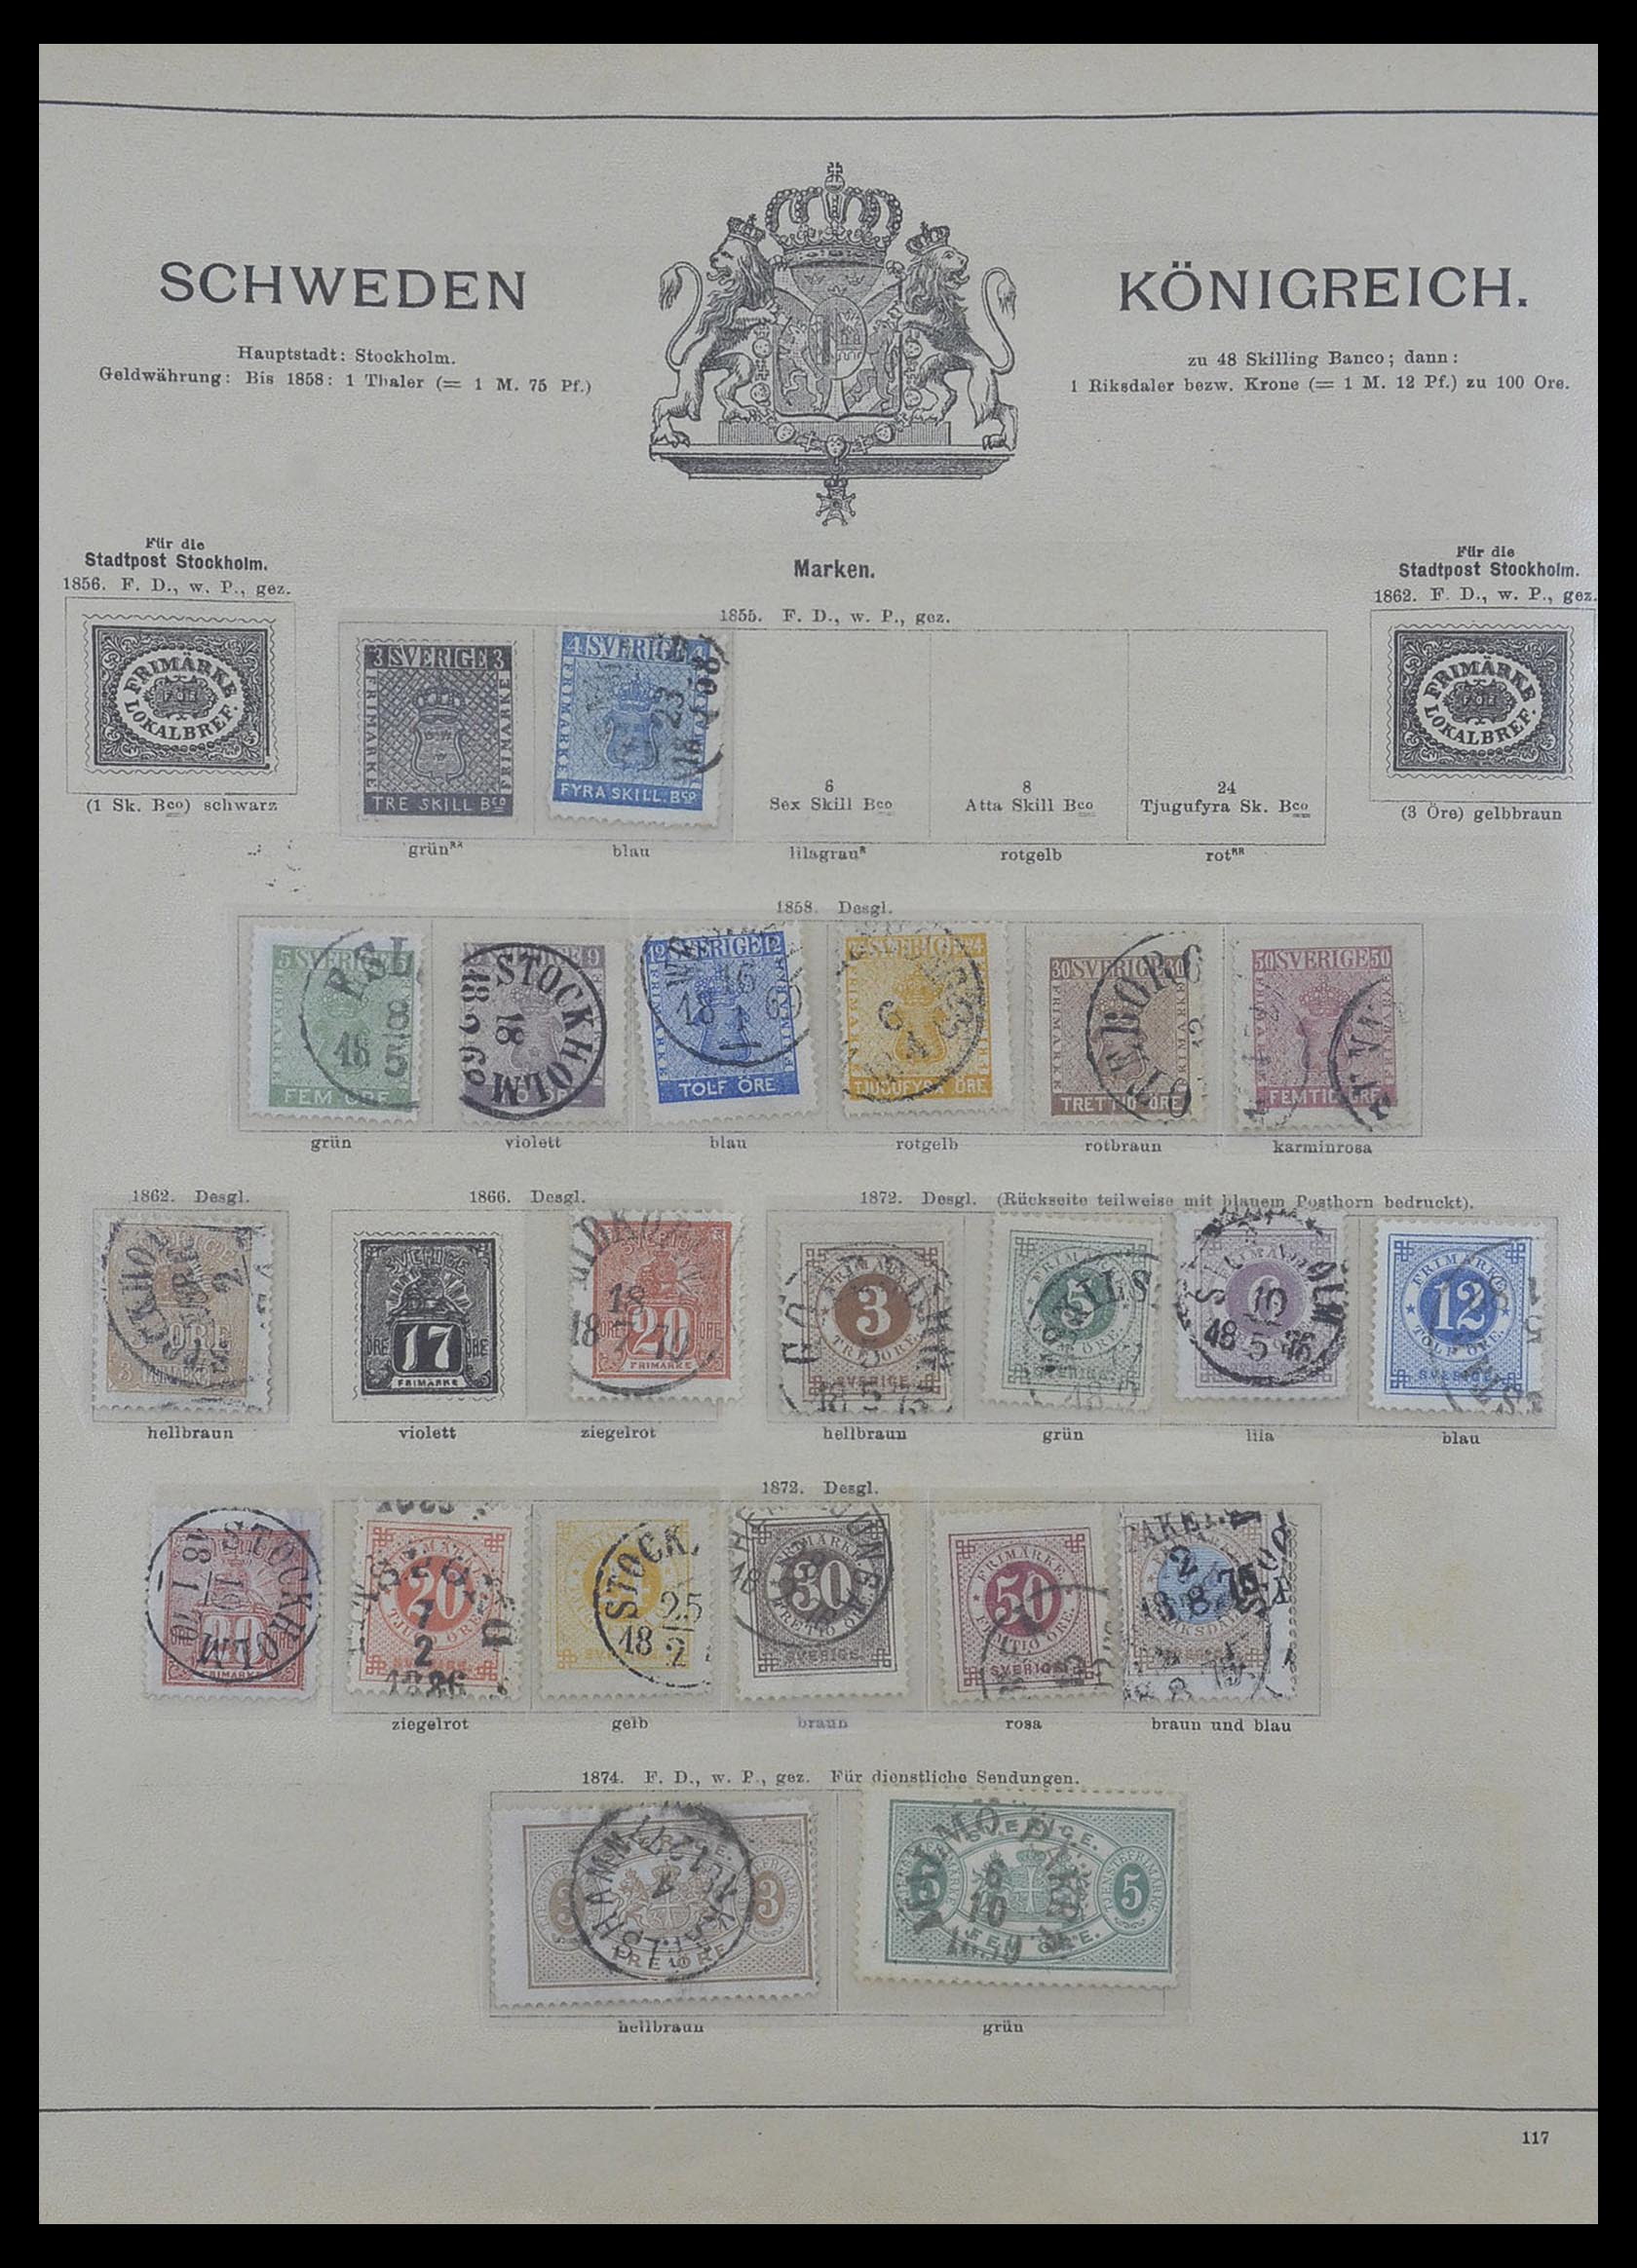 33628 011 - Stamp collection 33628 Scandinavia 1851-1900.